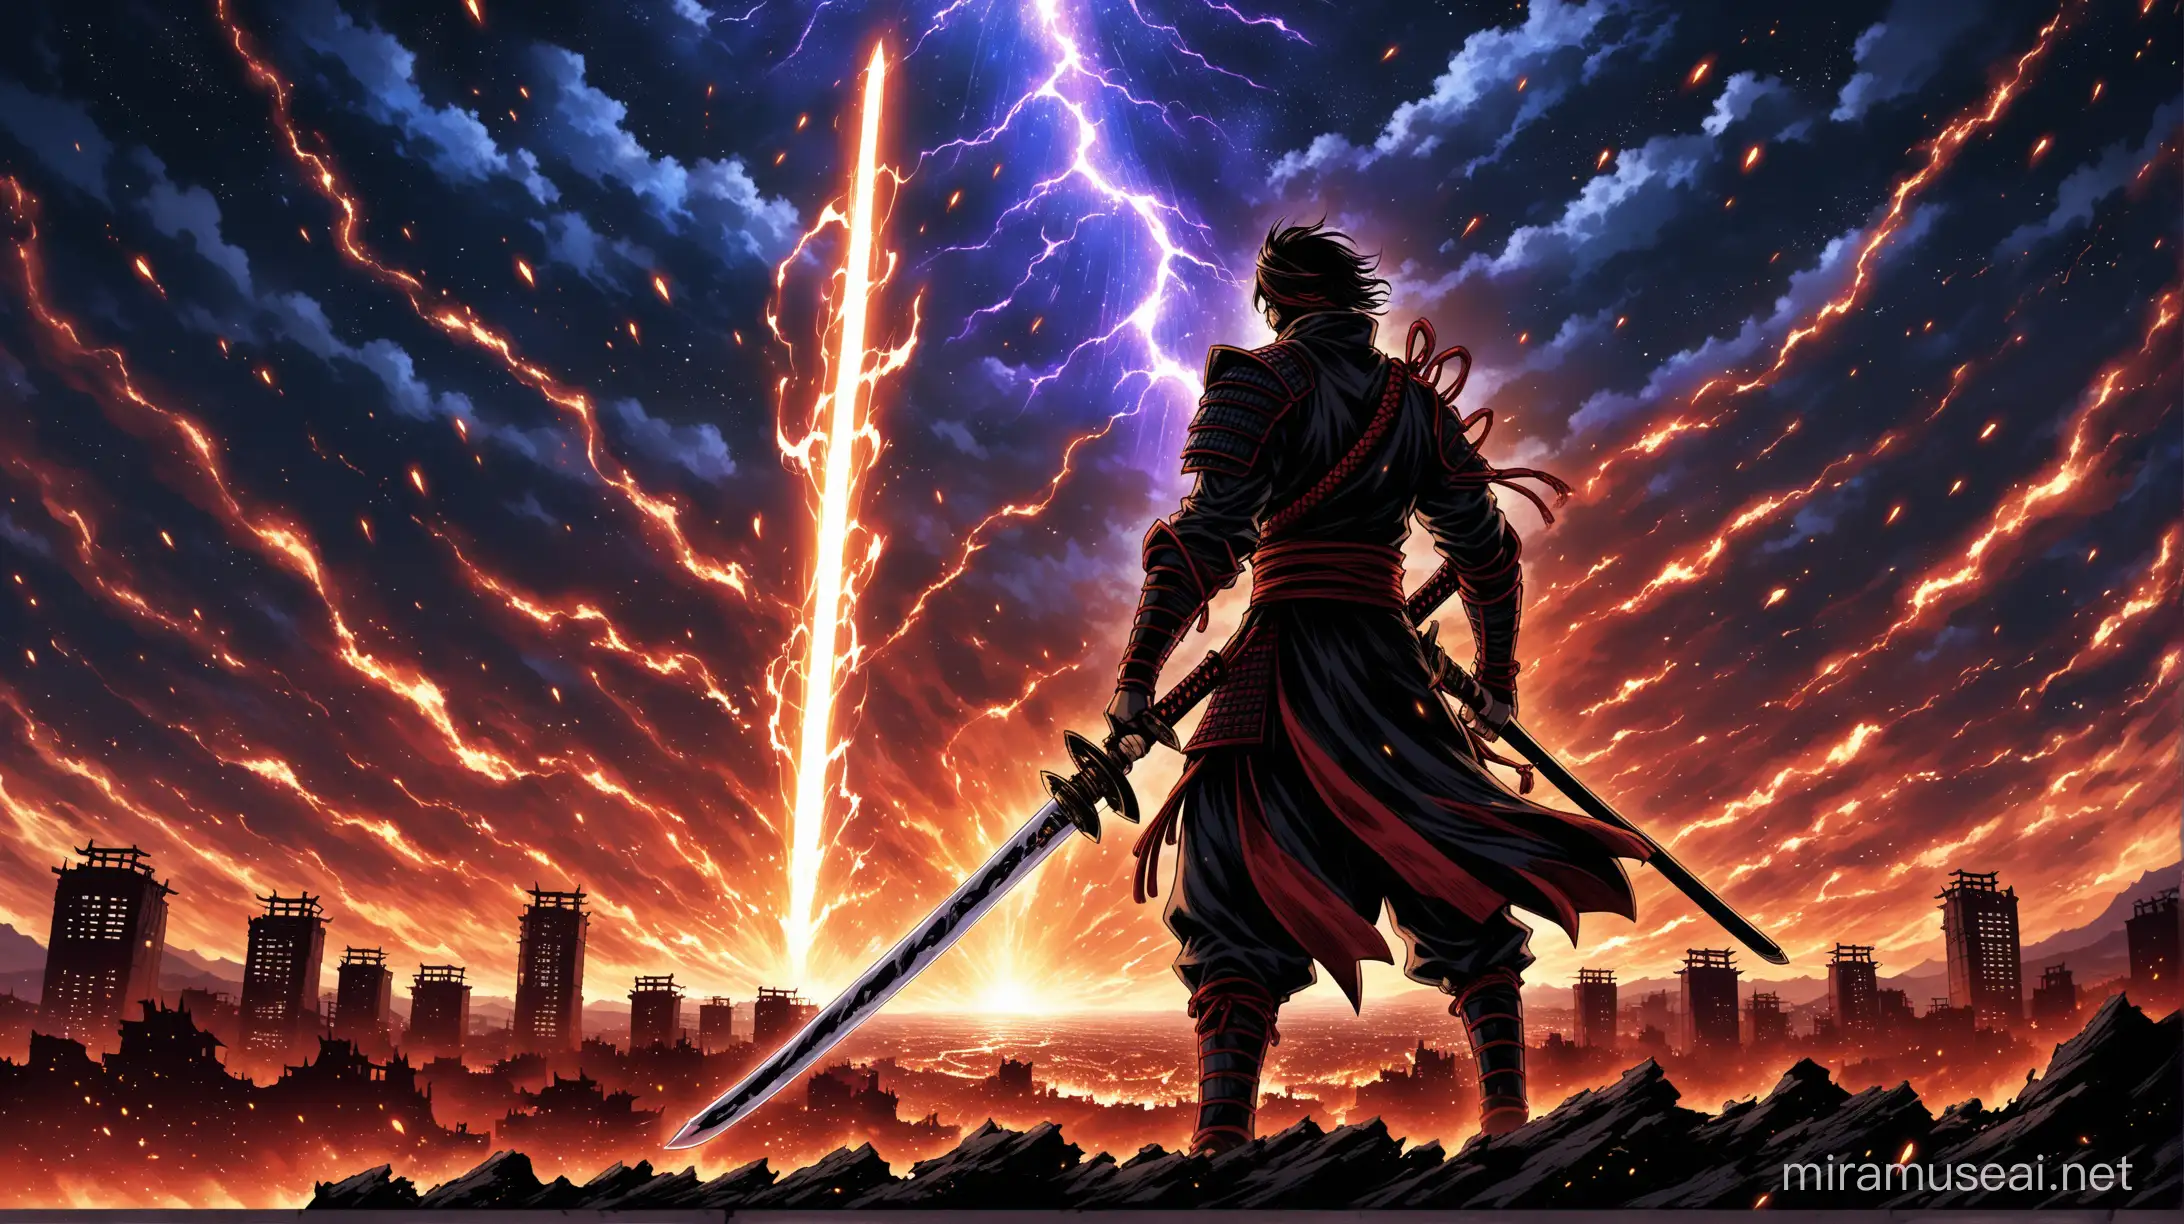 Cosmic Shadow Fighter Wielding Thunderous Sword in Ruined Samurai City